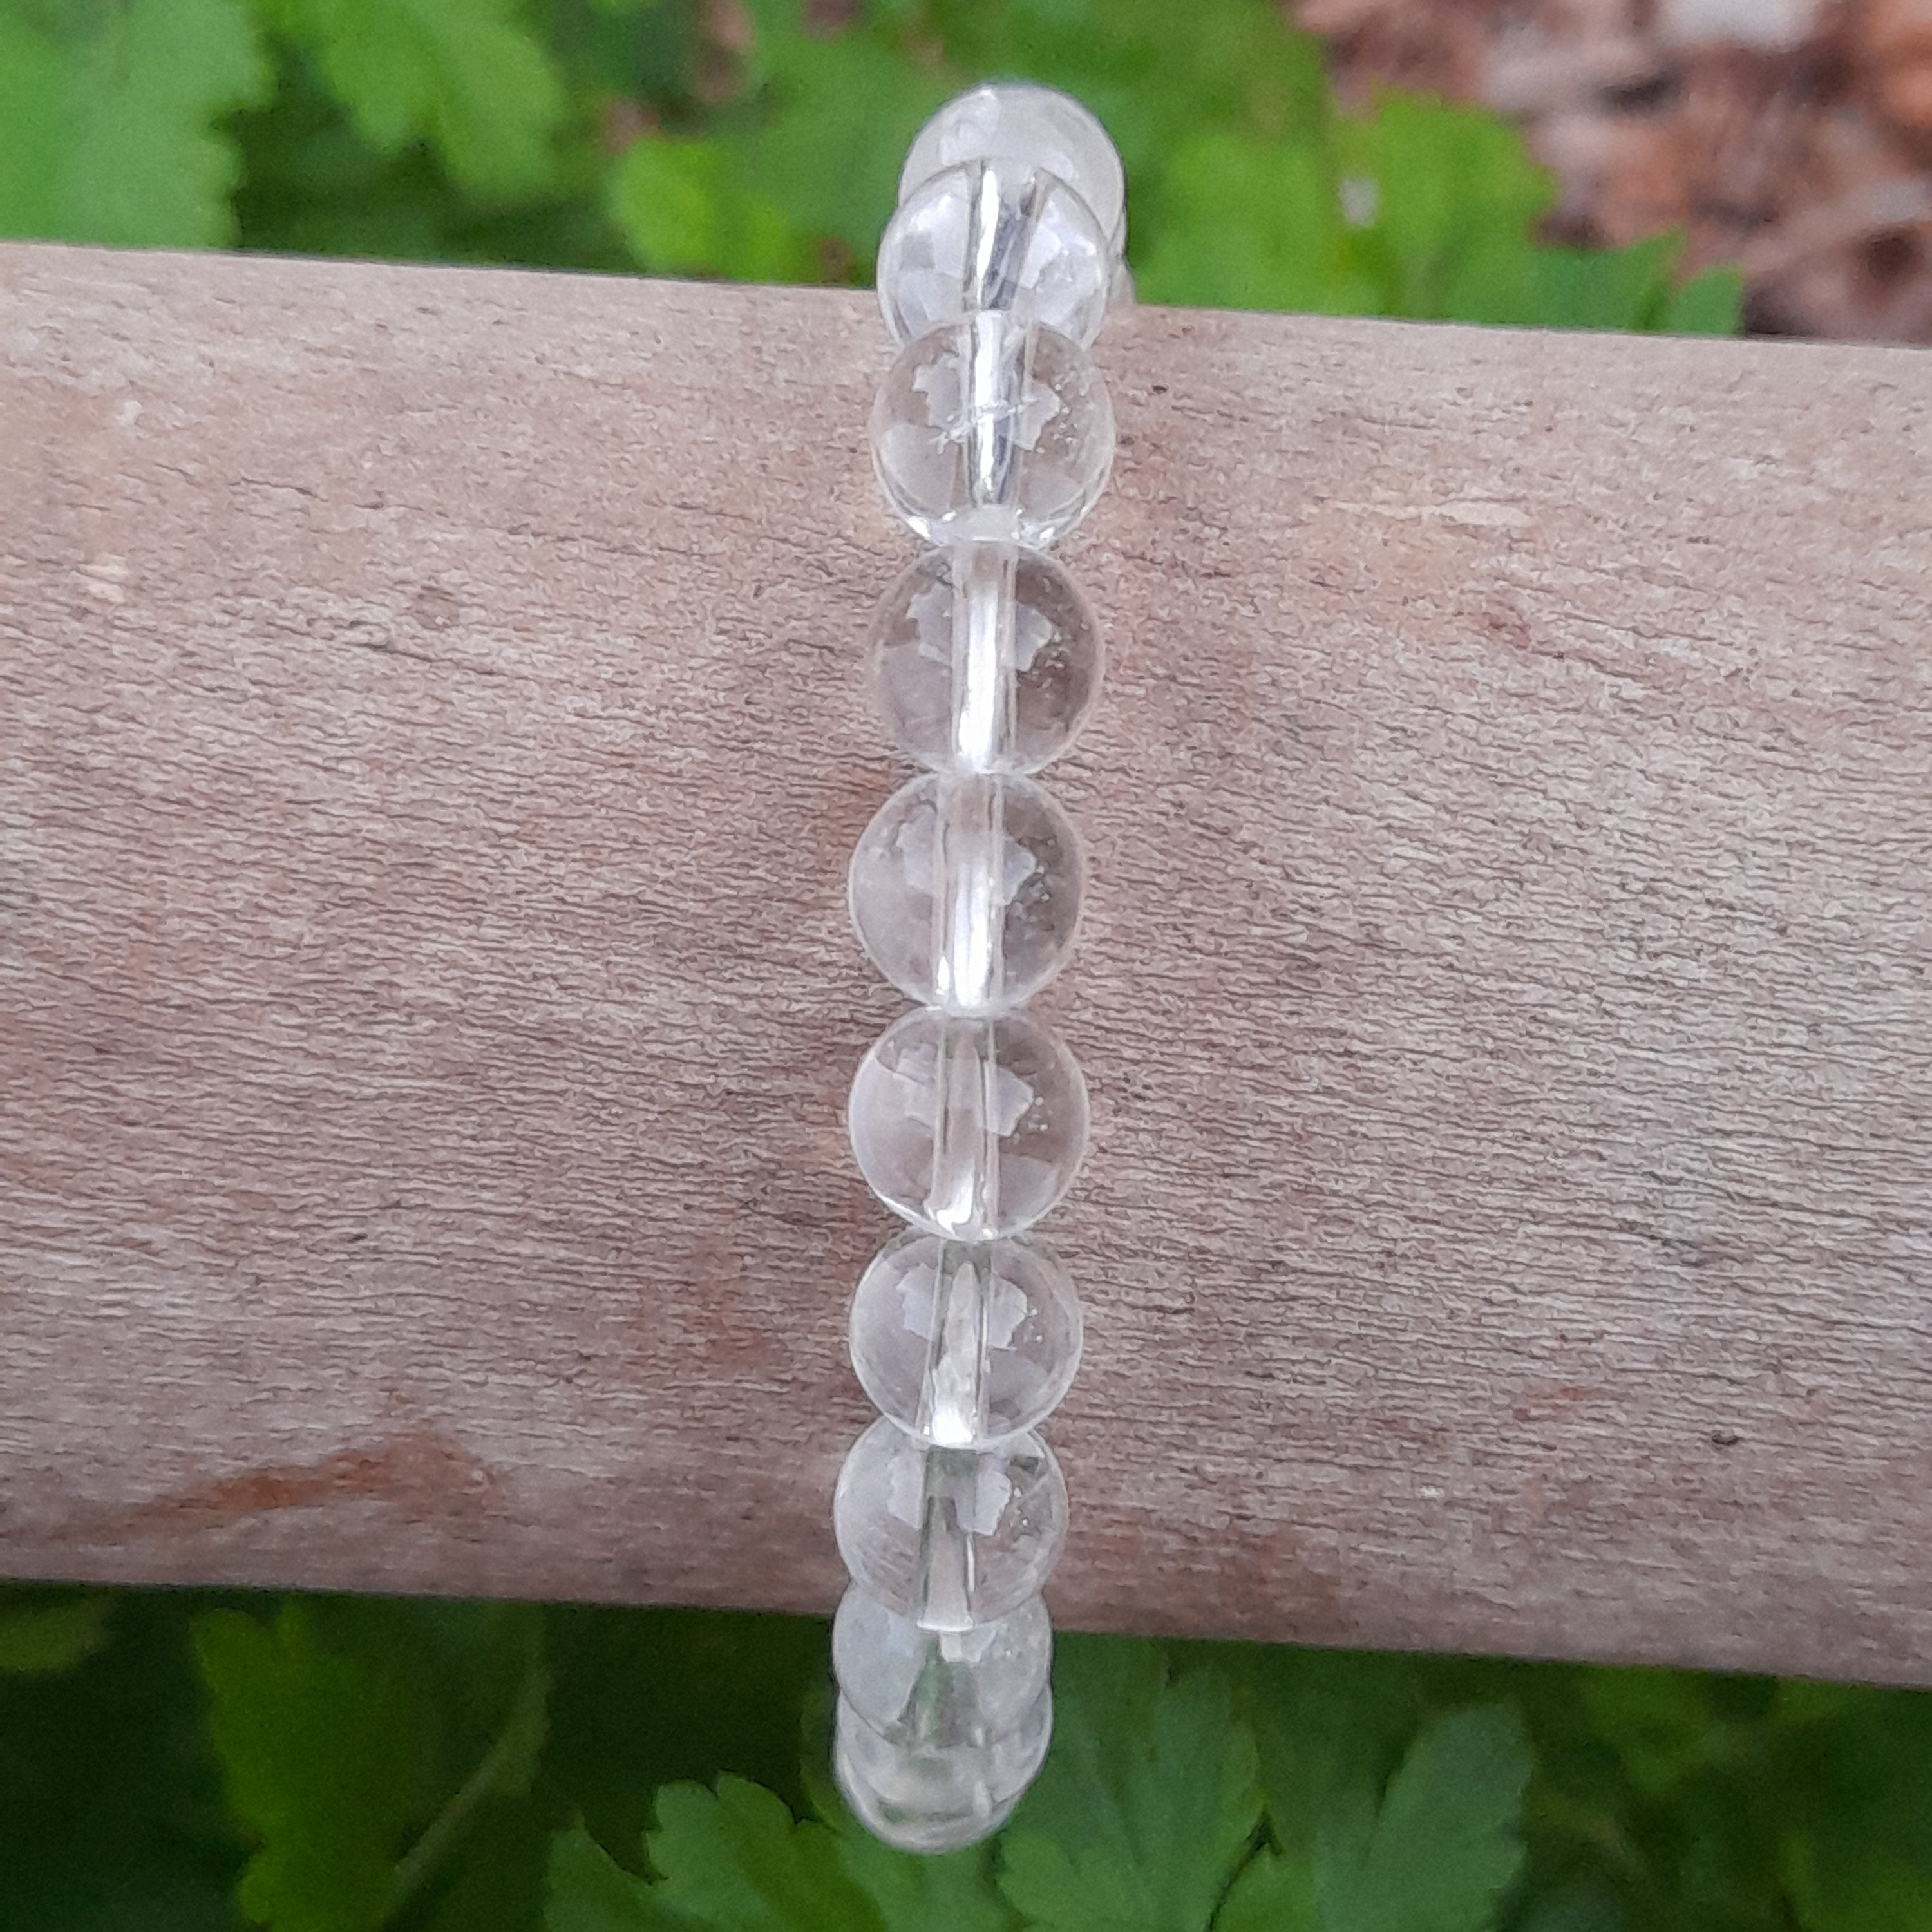 Clear Quartz Crystal Bracelet